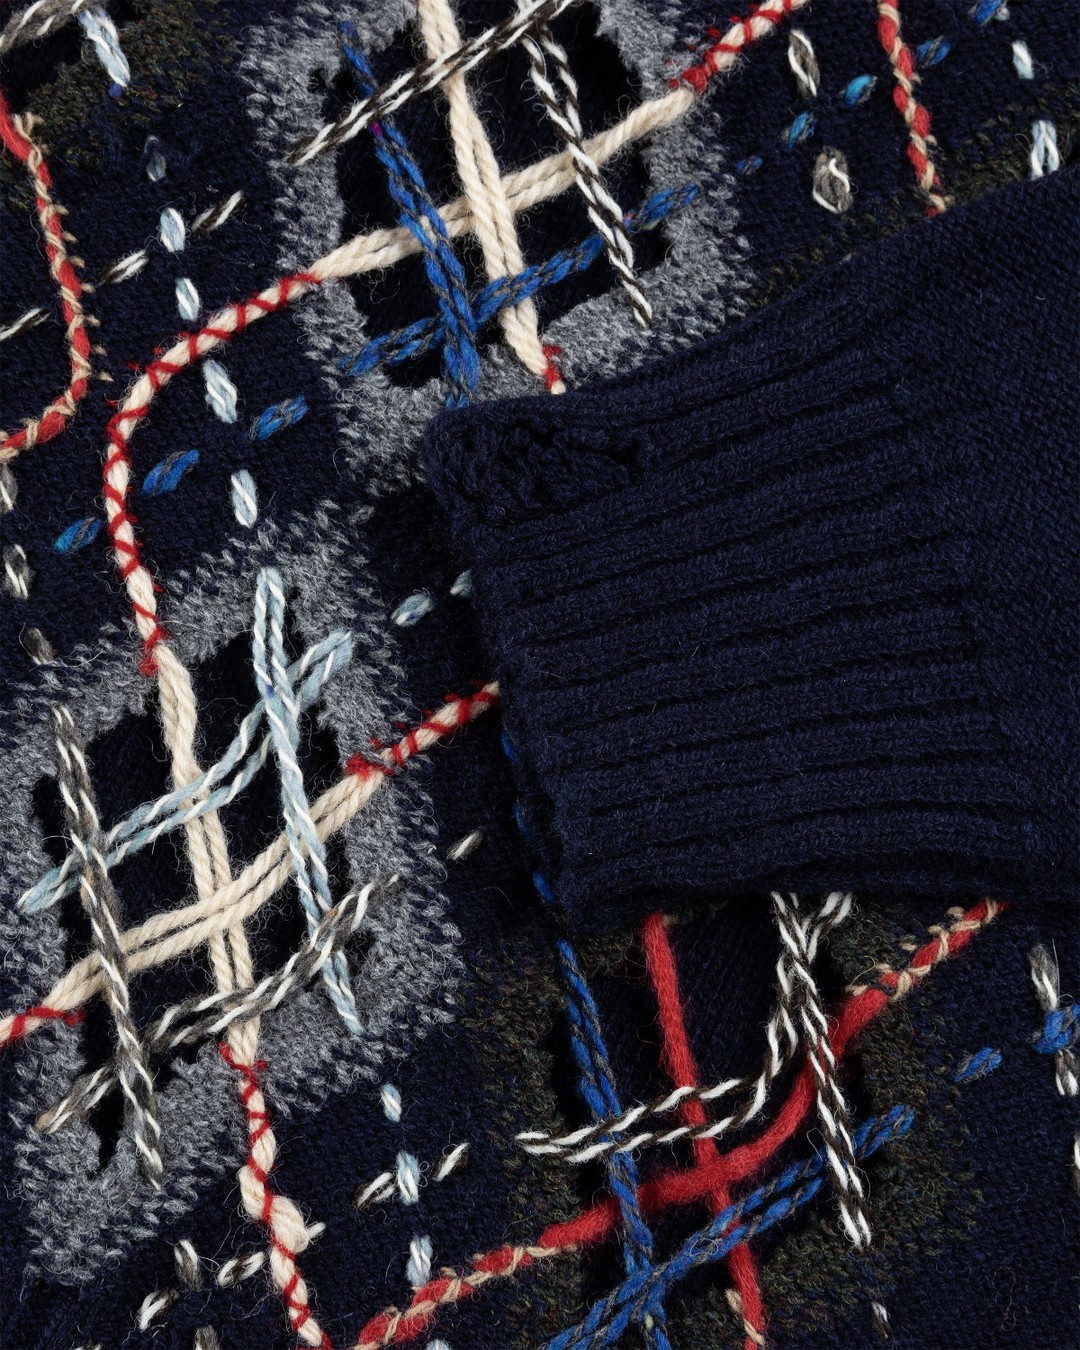 Maison Margiela – Distressed Wool Crewneck Sweater Multi - Sweats - Multi - Image 6